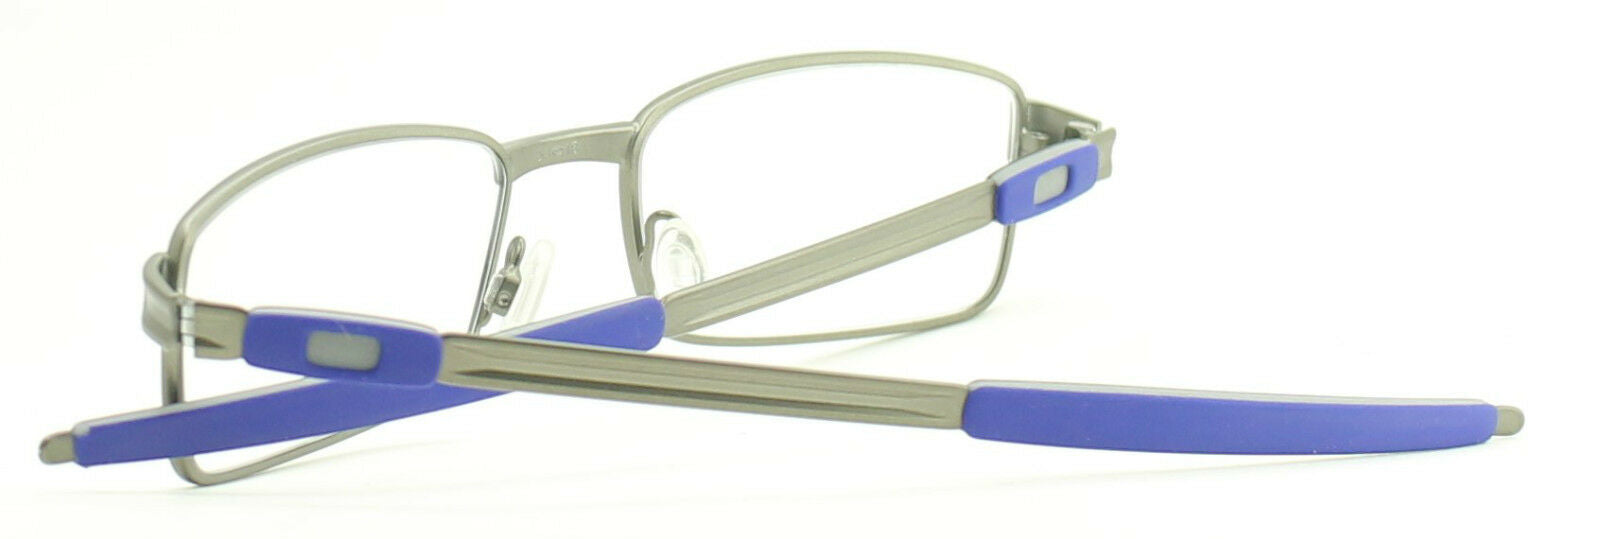 OAKLEY TUMBLEWEED OX3112-0453 Eyewear FRAMES RX Optical Eyeglasses Glasses - New